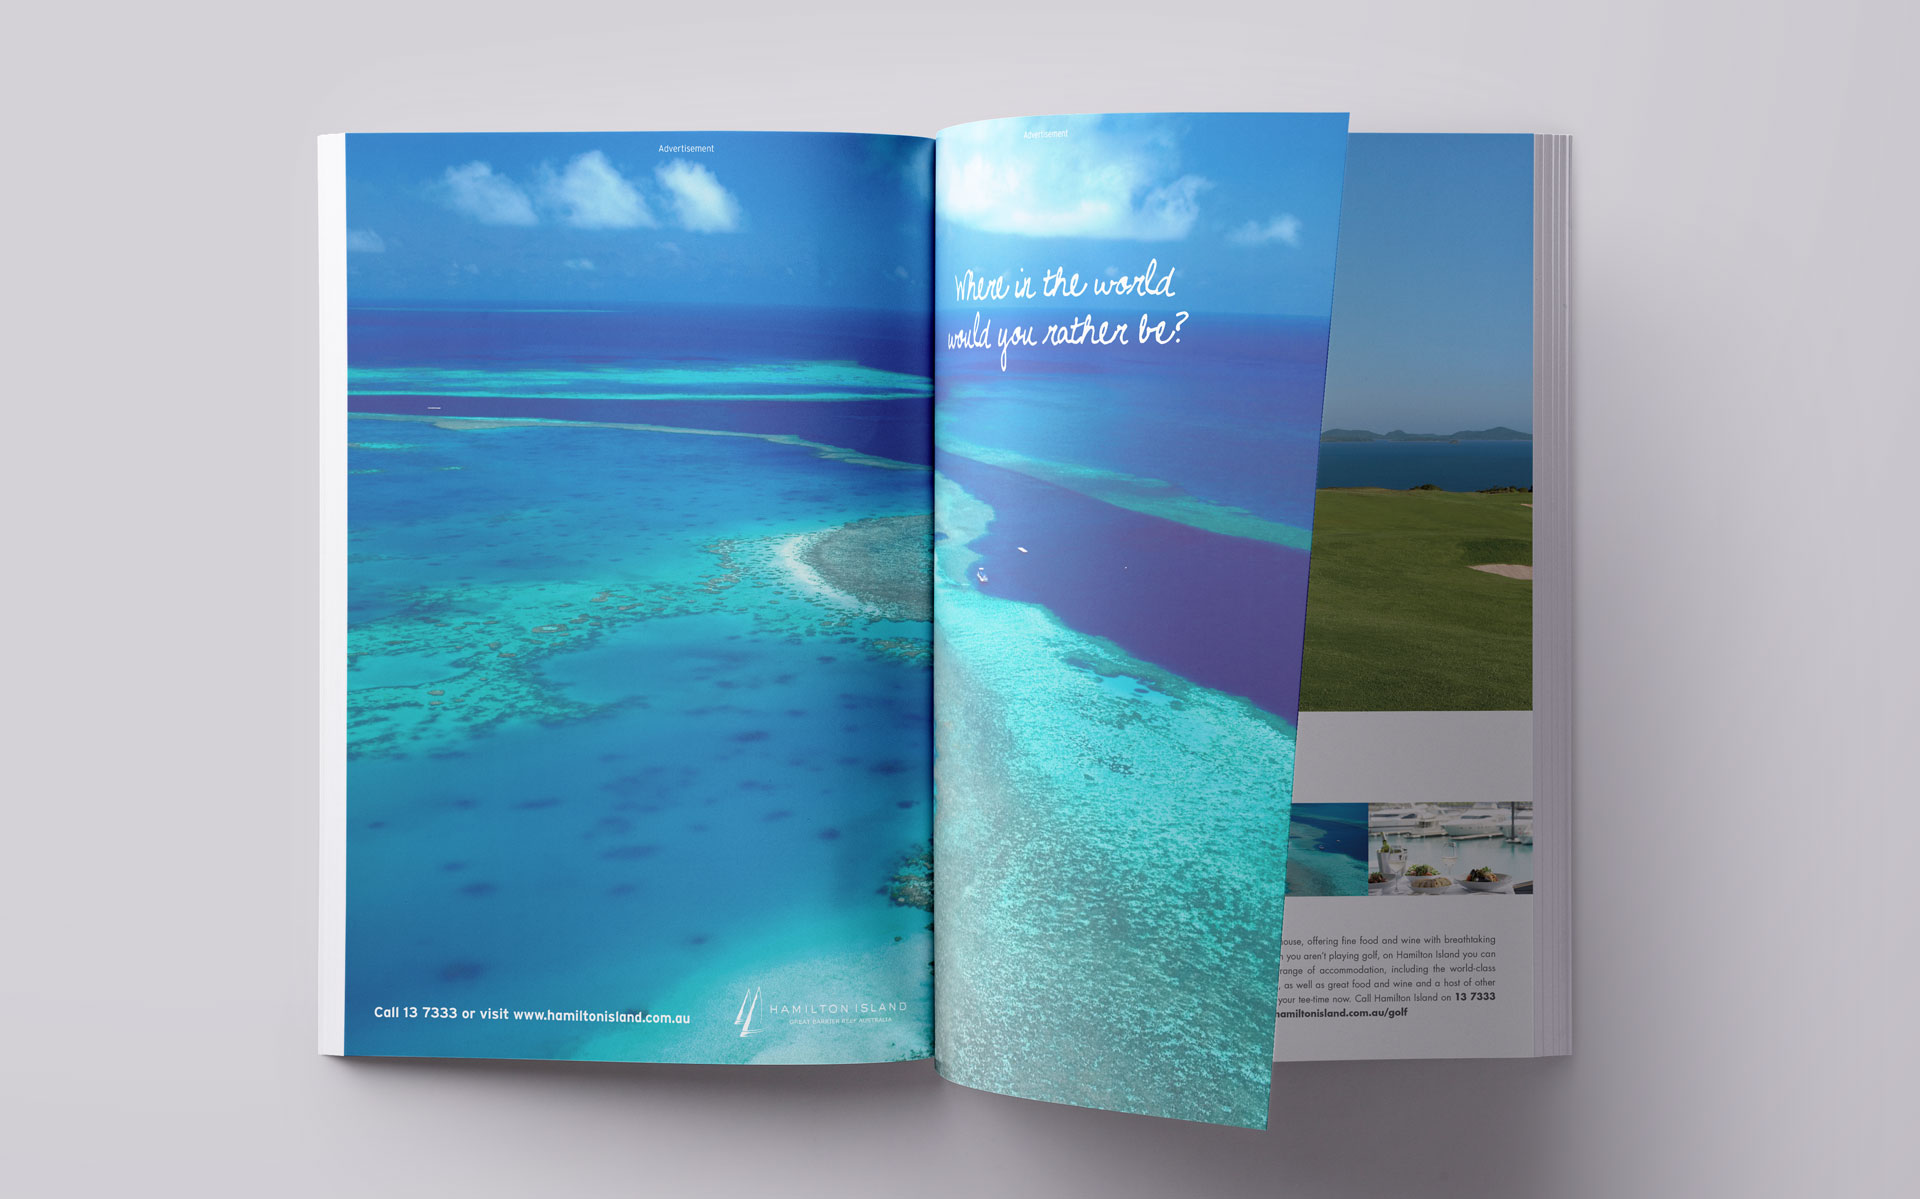 Hamilton Island marketing, advertising, publications & events designed by Amy Howard